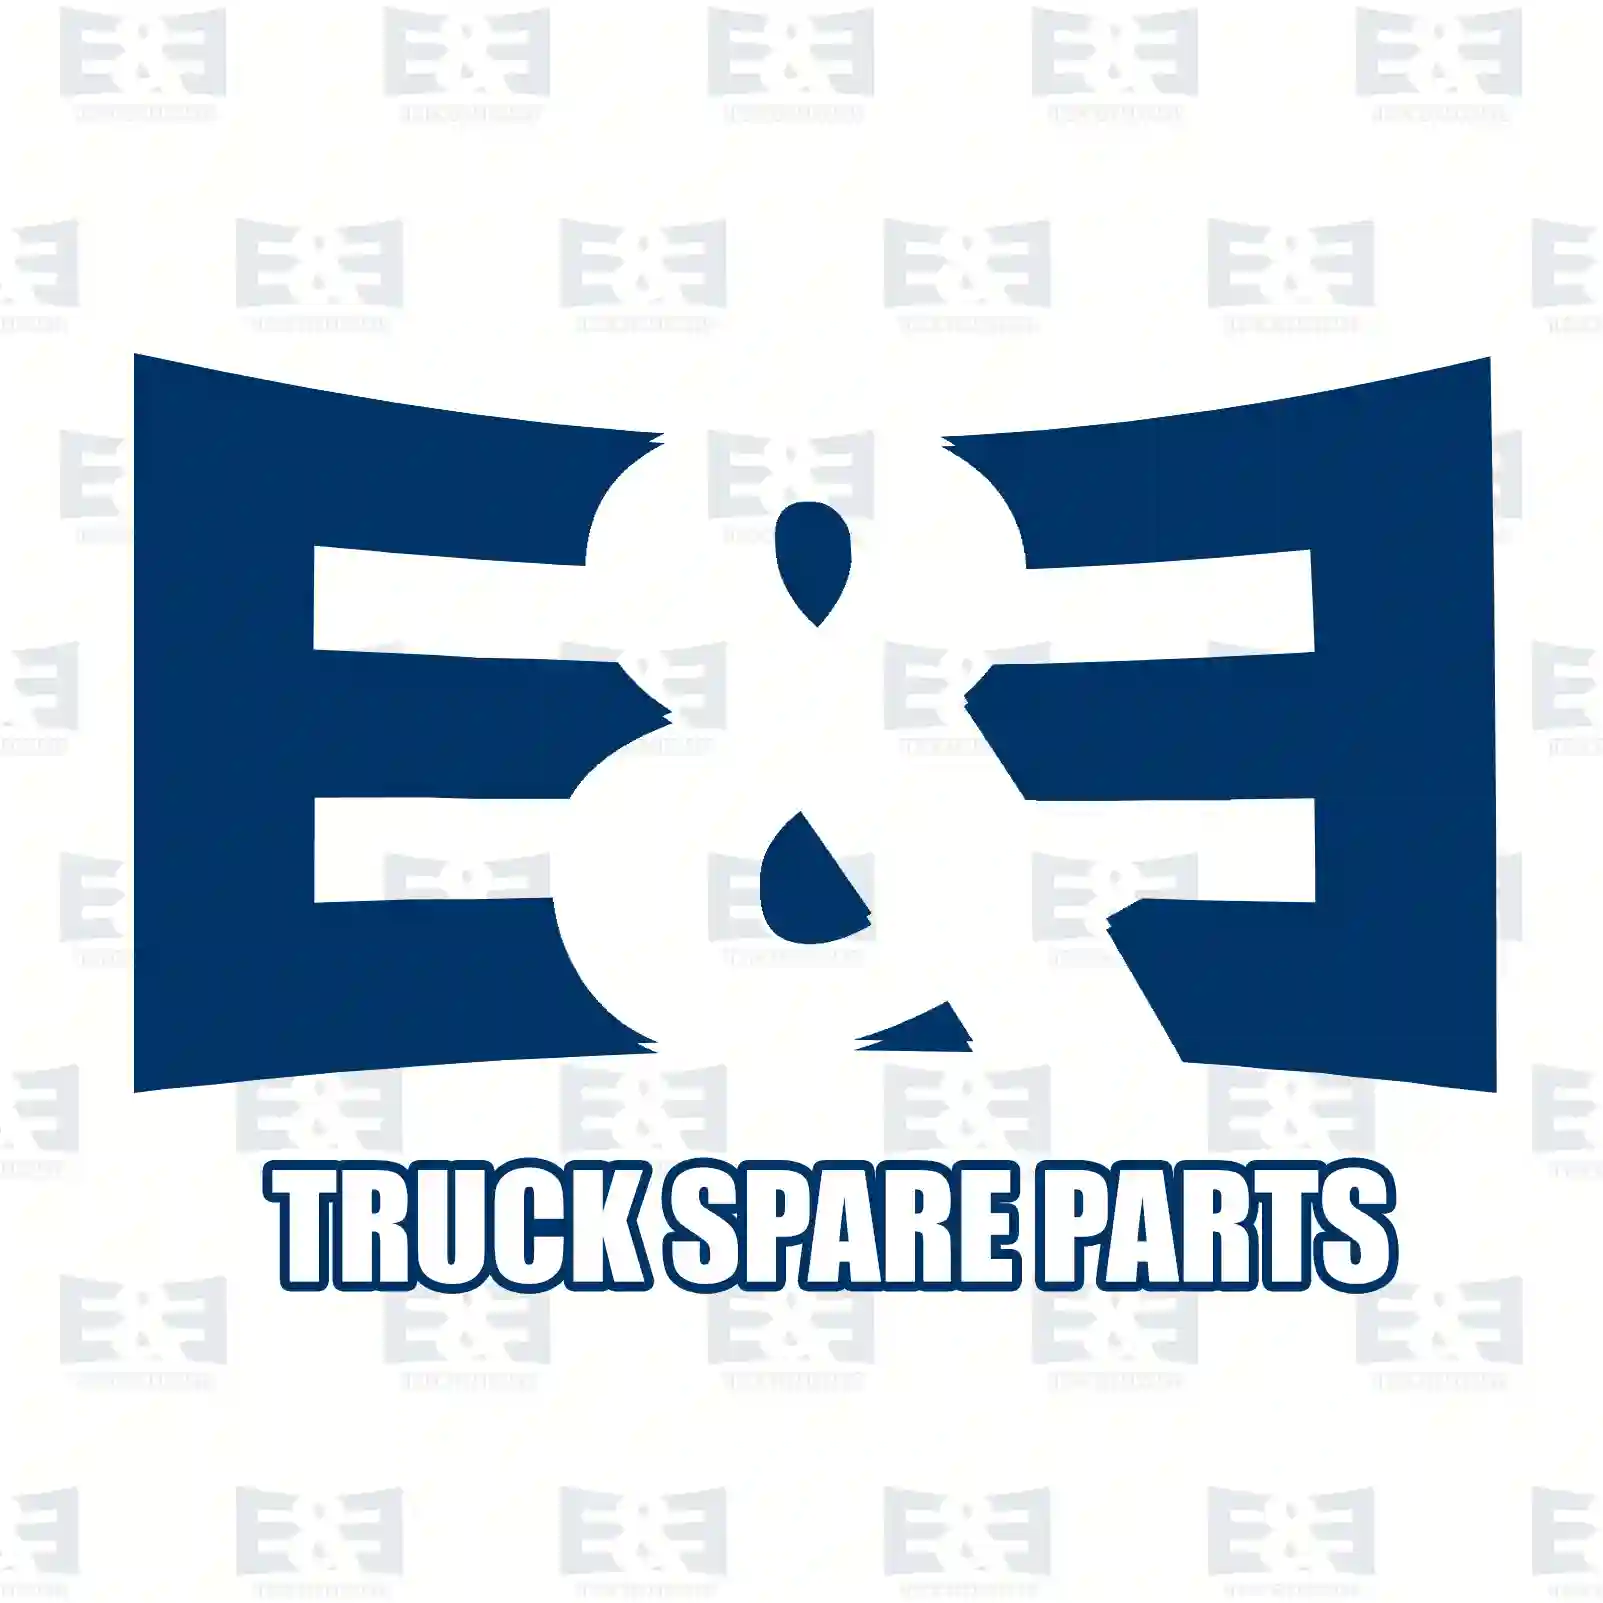 Drum brake lining kit, axle kit - oversize, 2E2294467, 0683034, 0683275, 1808125, 682417, 682419, 682826, 682858, 683004, 683034, 683275, 683275S ||  2E2294467 E&E Truck Spare Parts | Truck Spare Parts, Auotomotive Spare Parts Drum brake lining kit, axle kit - oversize, 2E2294467, 0683034, 0683275, 1808125, 682417, 682419, 682826, 682858, 683004, 683034, 683275, 683275S ||  2E2294467 E&E Truck Spare Parts | Truck Spare Parts, Auotomotive Spare Parts